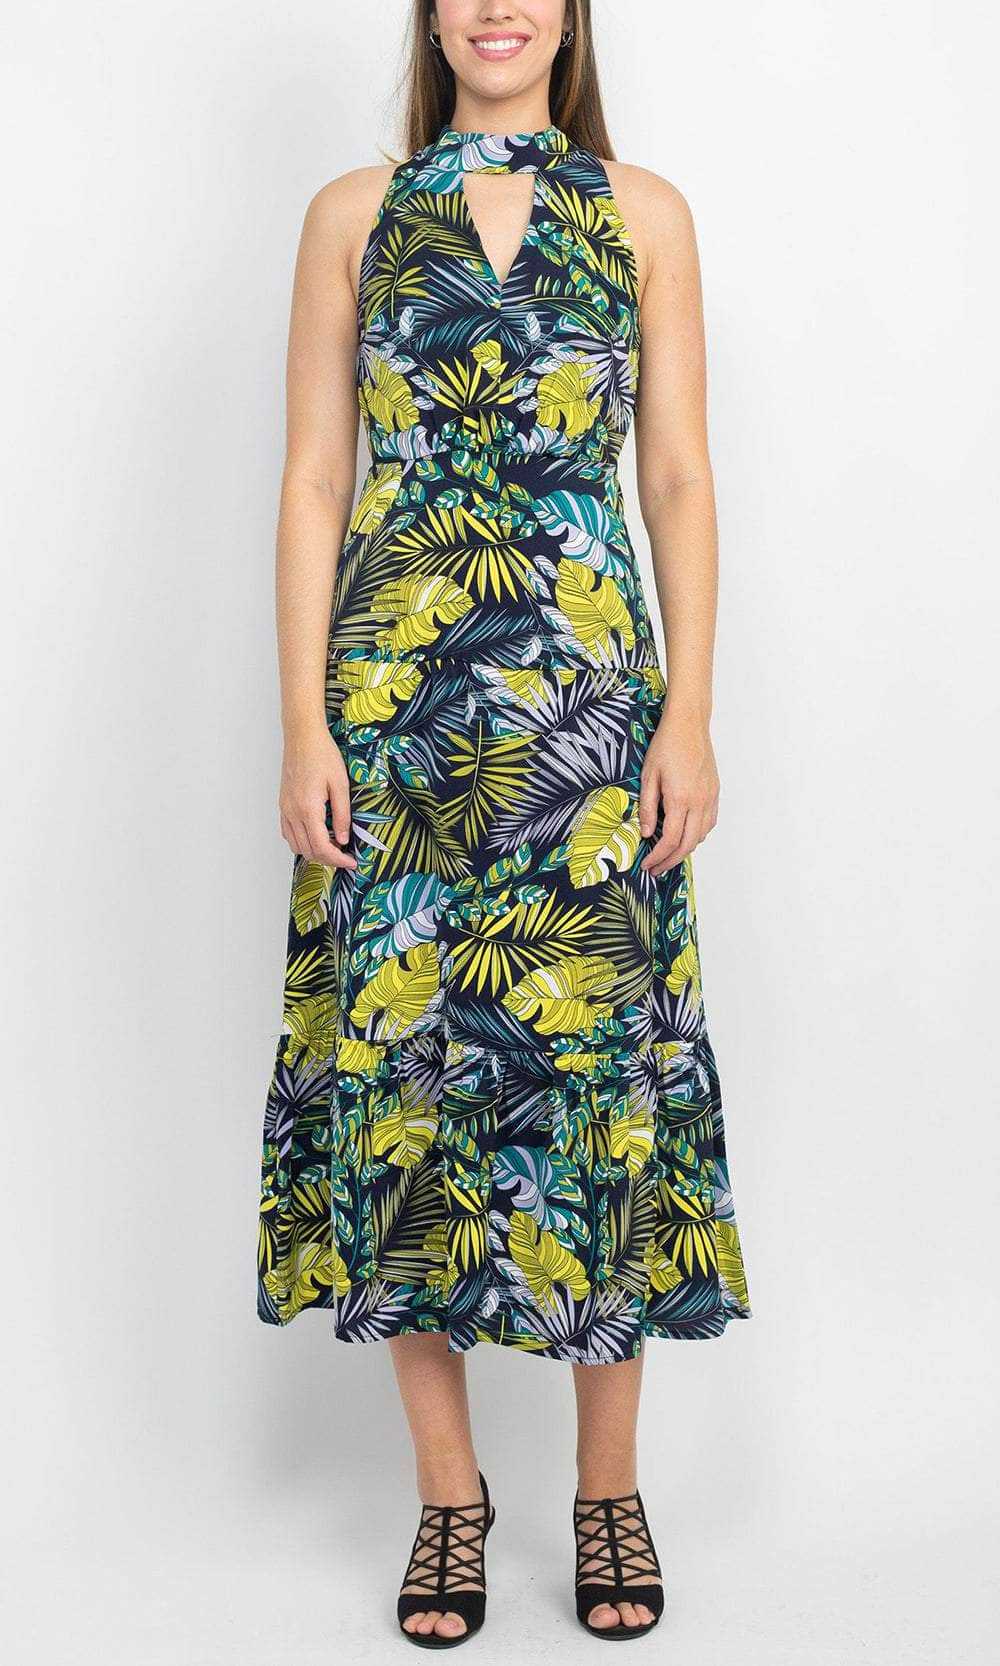 Sam Edelman, Sam Edelman 09K751 - Keyhole Front Floral Long Dress